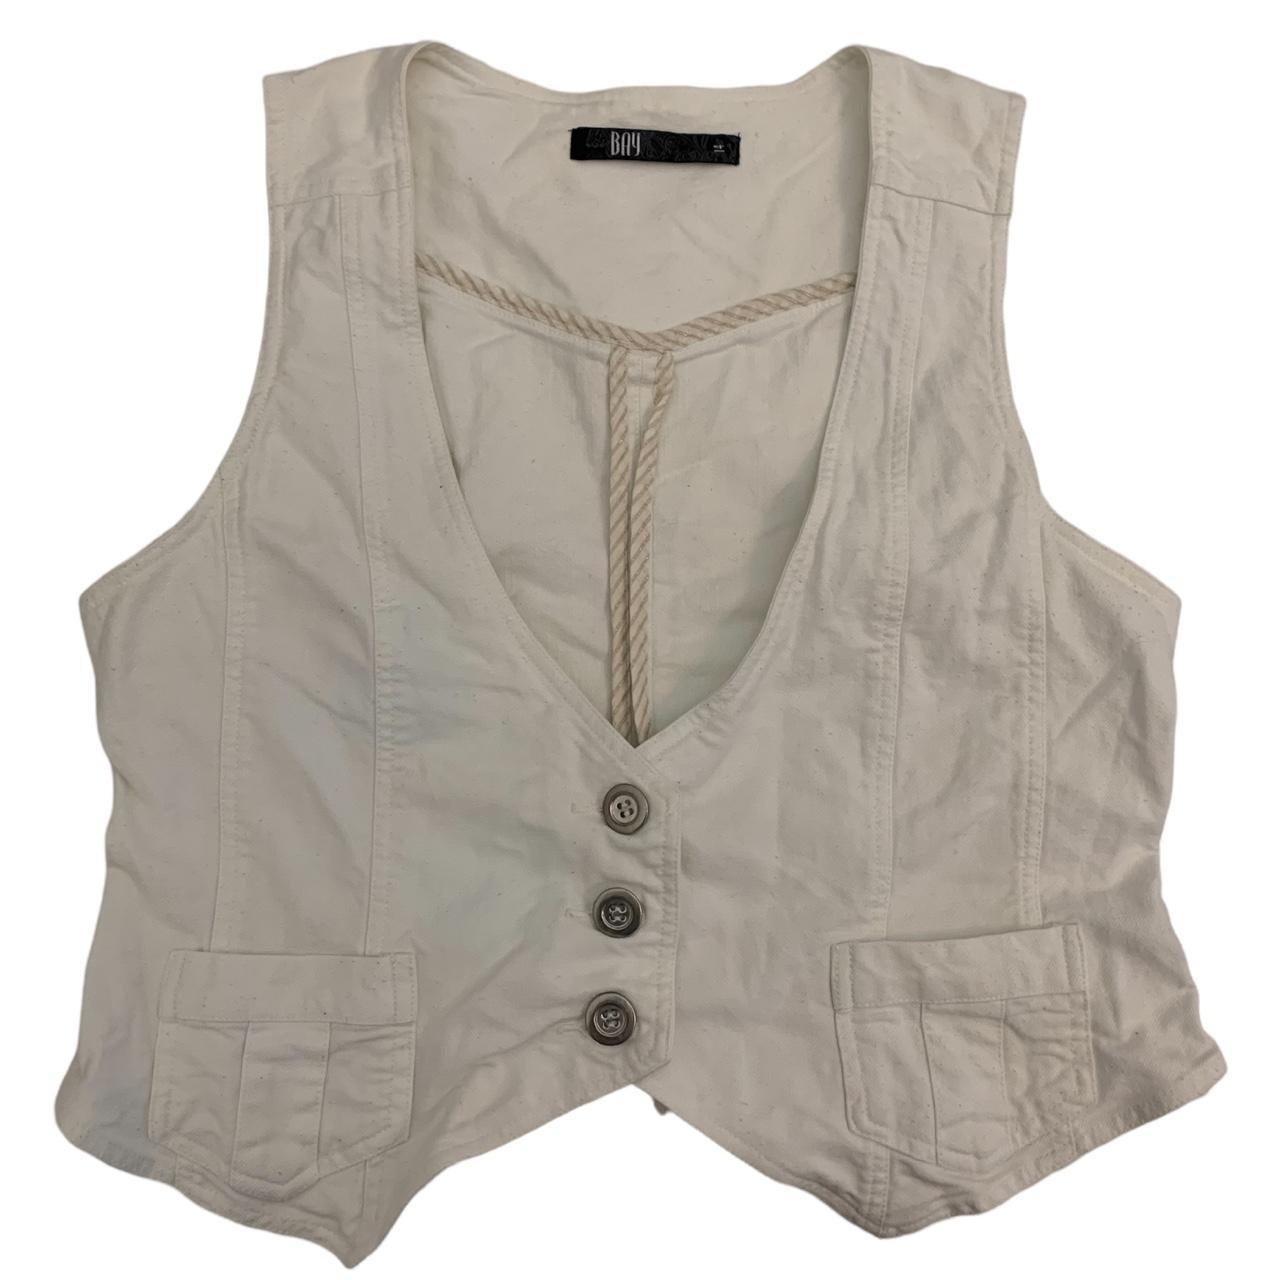 Women's White Vests-tanks-camis | Depop